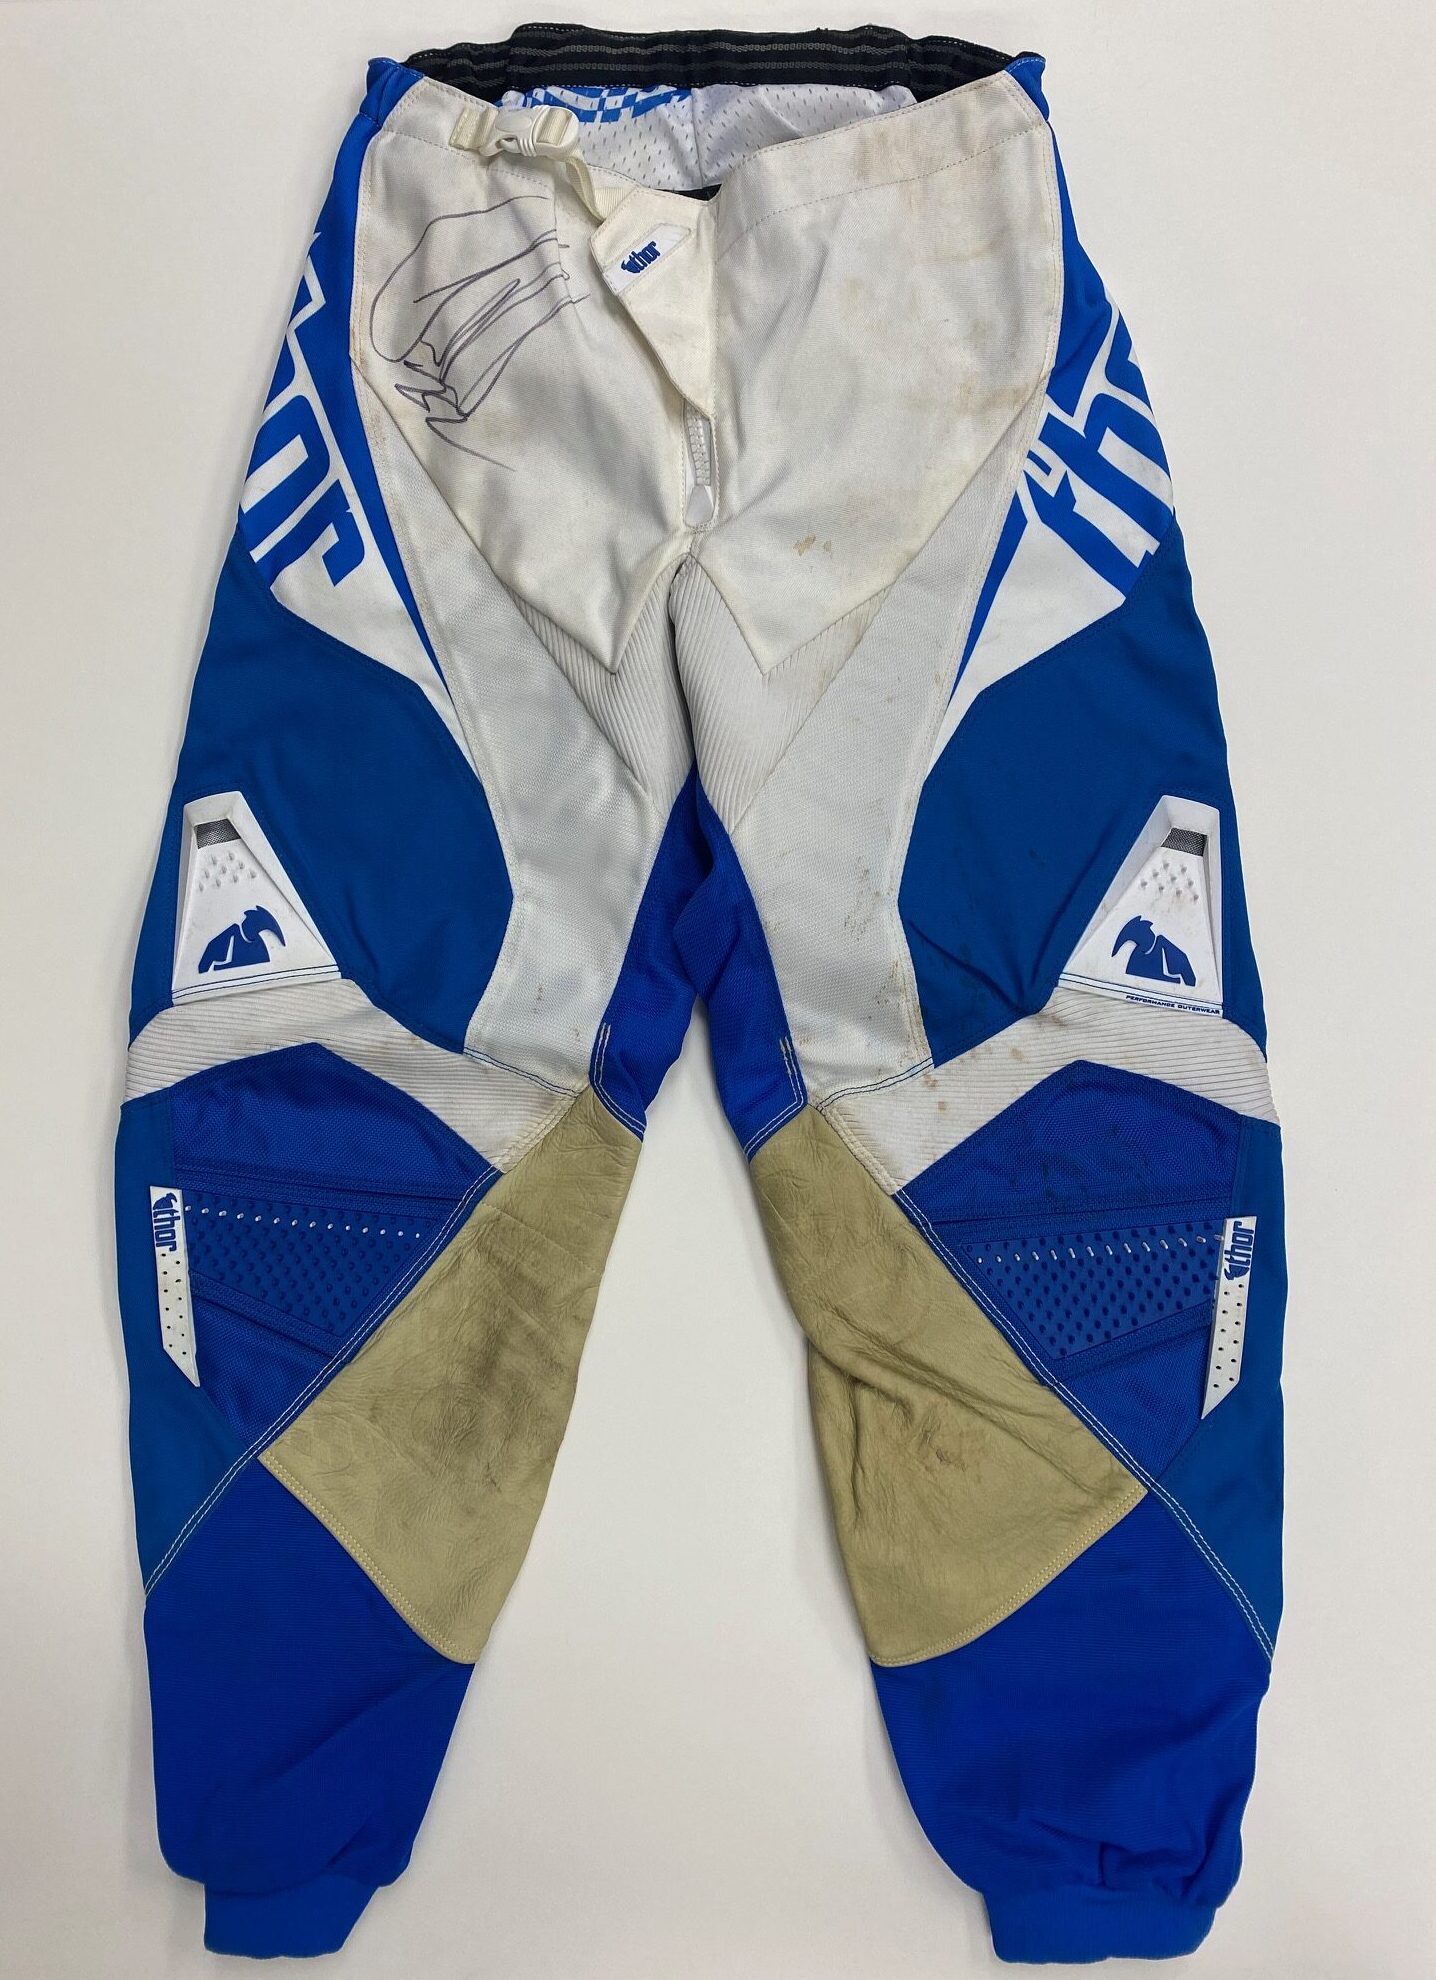 Chad Reed Honda Speedy Shift MX Motocross Pants Supercross Sewn Patches  8436 G6